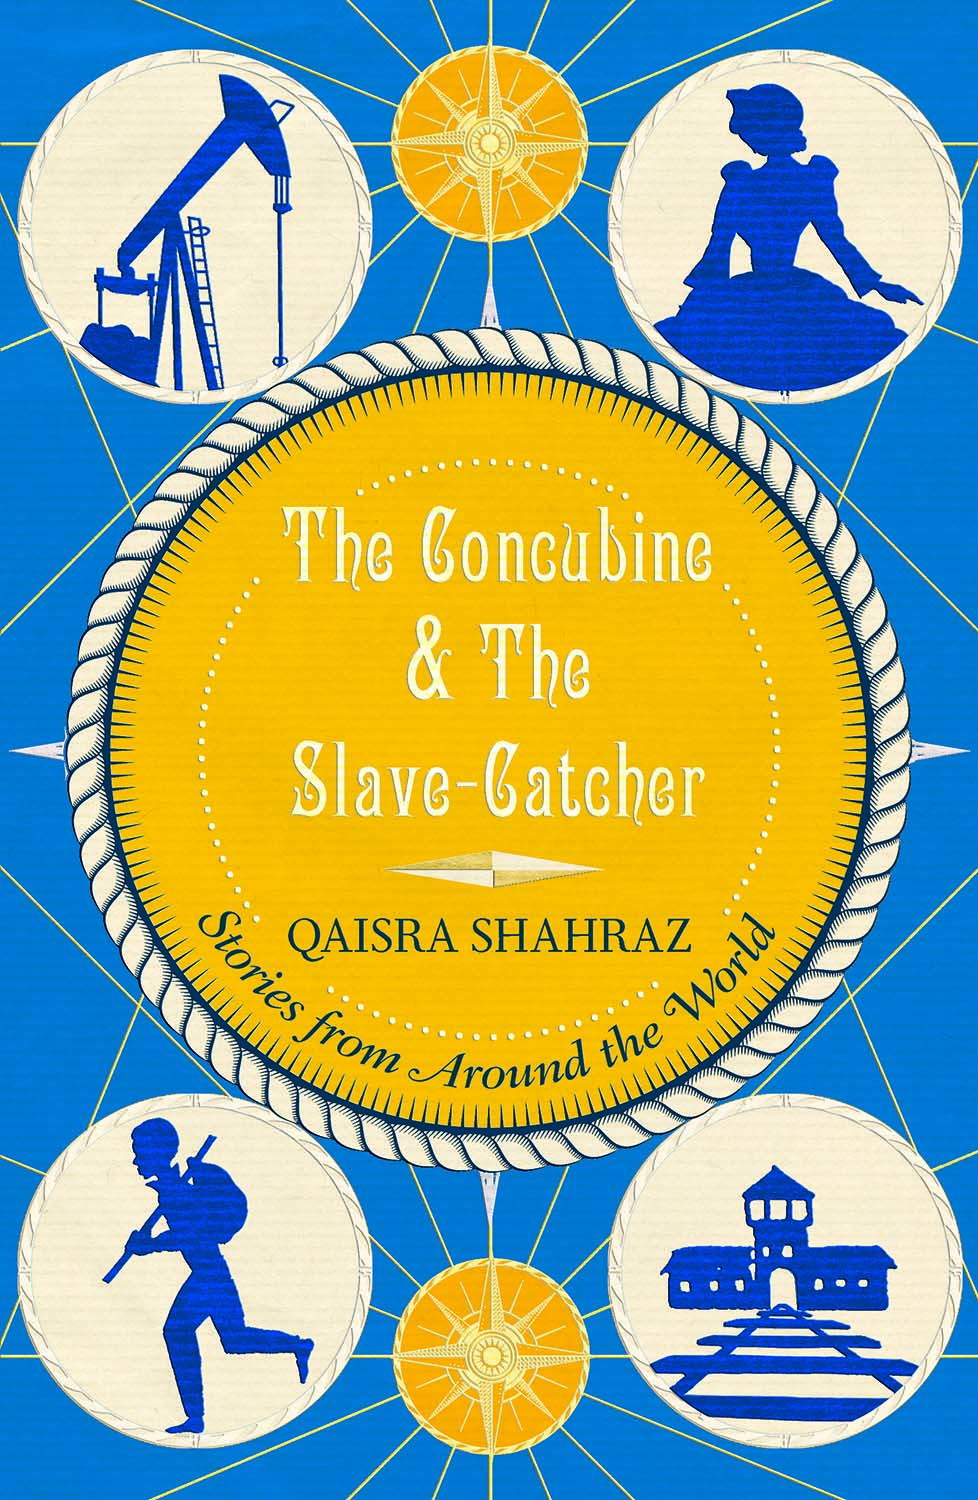 Qaisra Shshraz: The Concubine & The Slave-Catcher